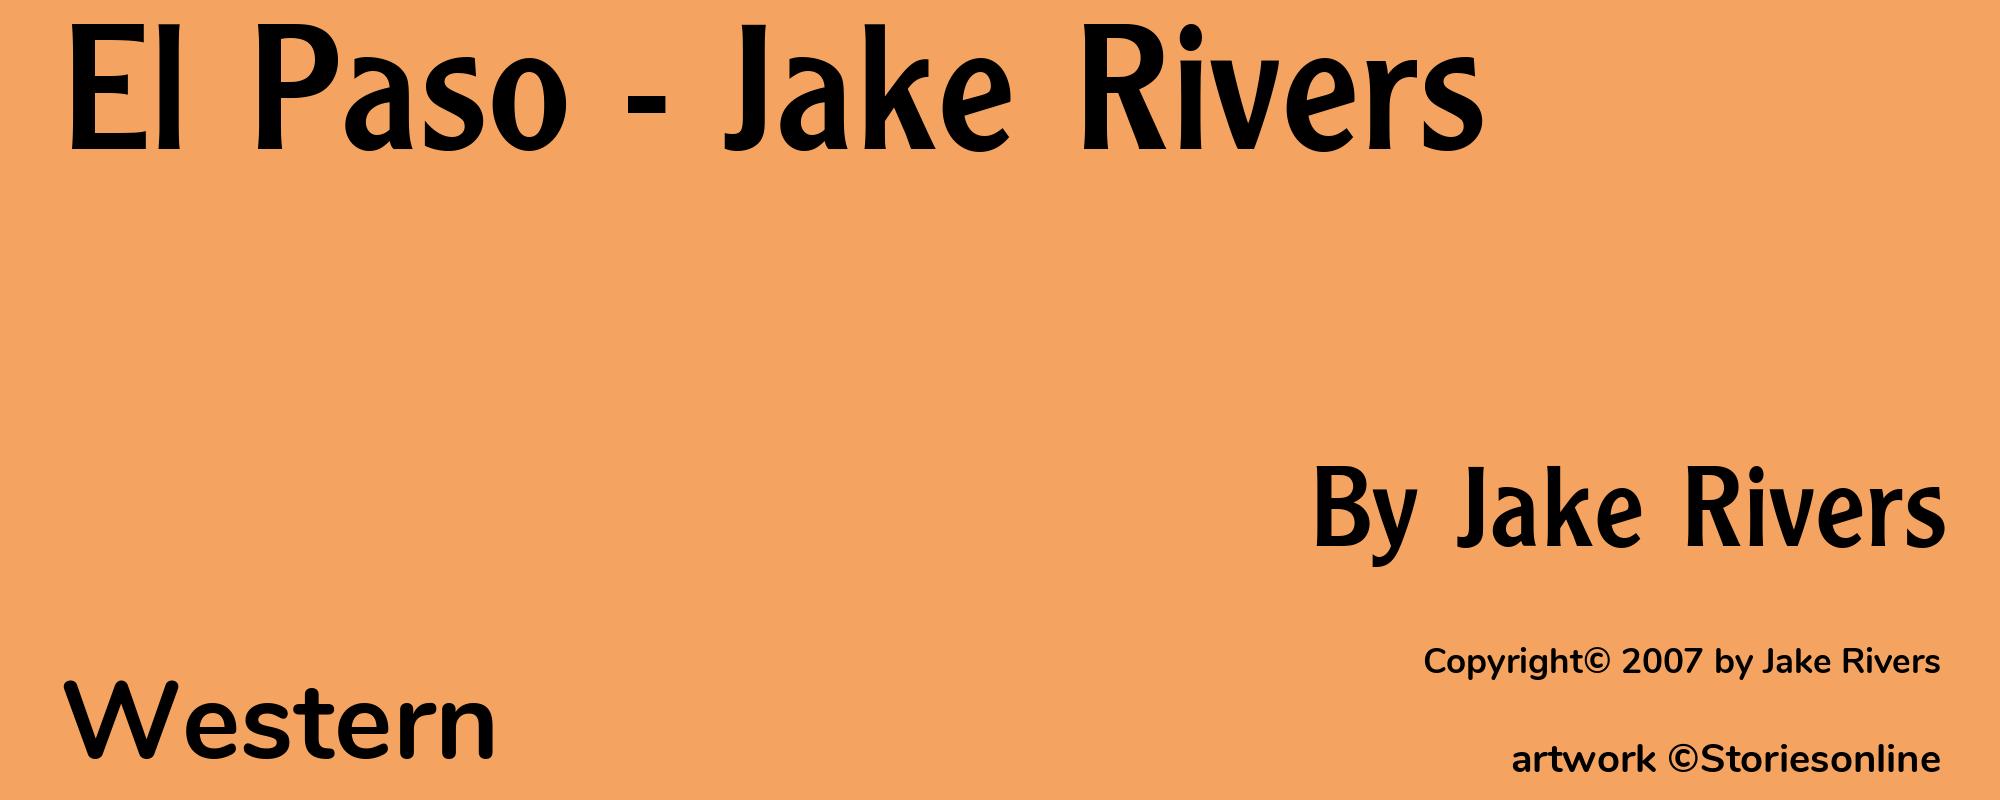 El Paso - Jake Rivers - Cover